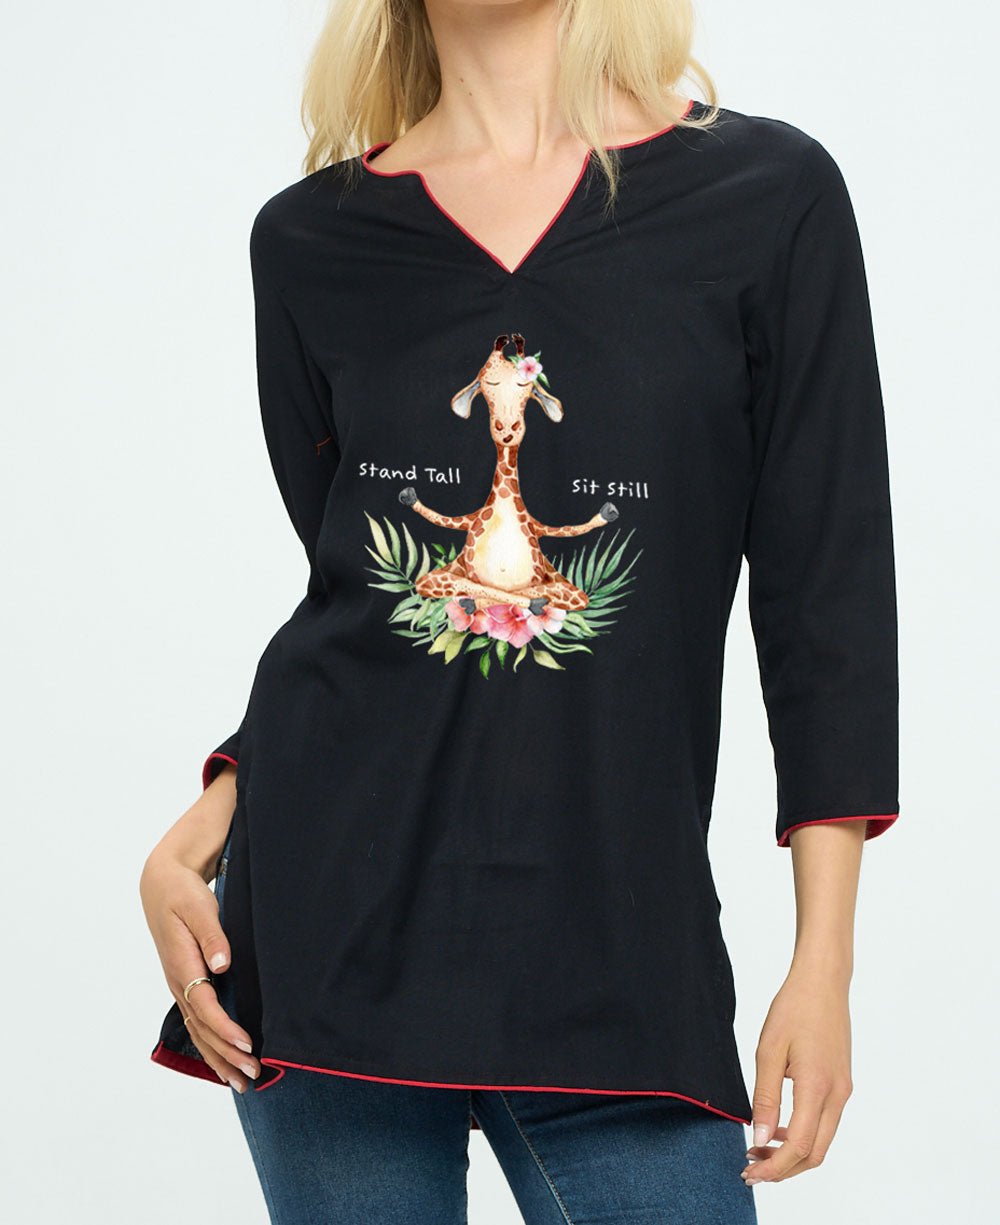 Black Cotton Tunic Top with Meditating Giraffe Print - Shirts & Tops S